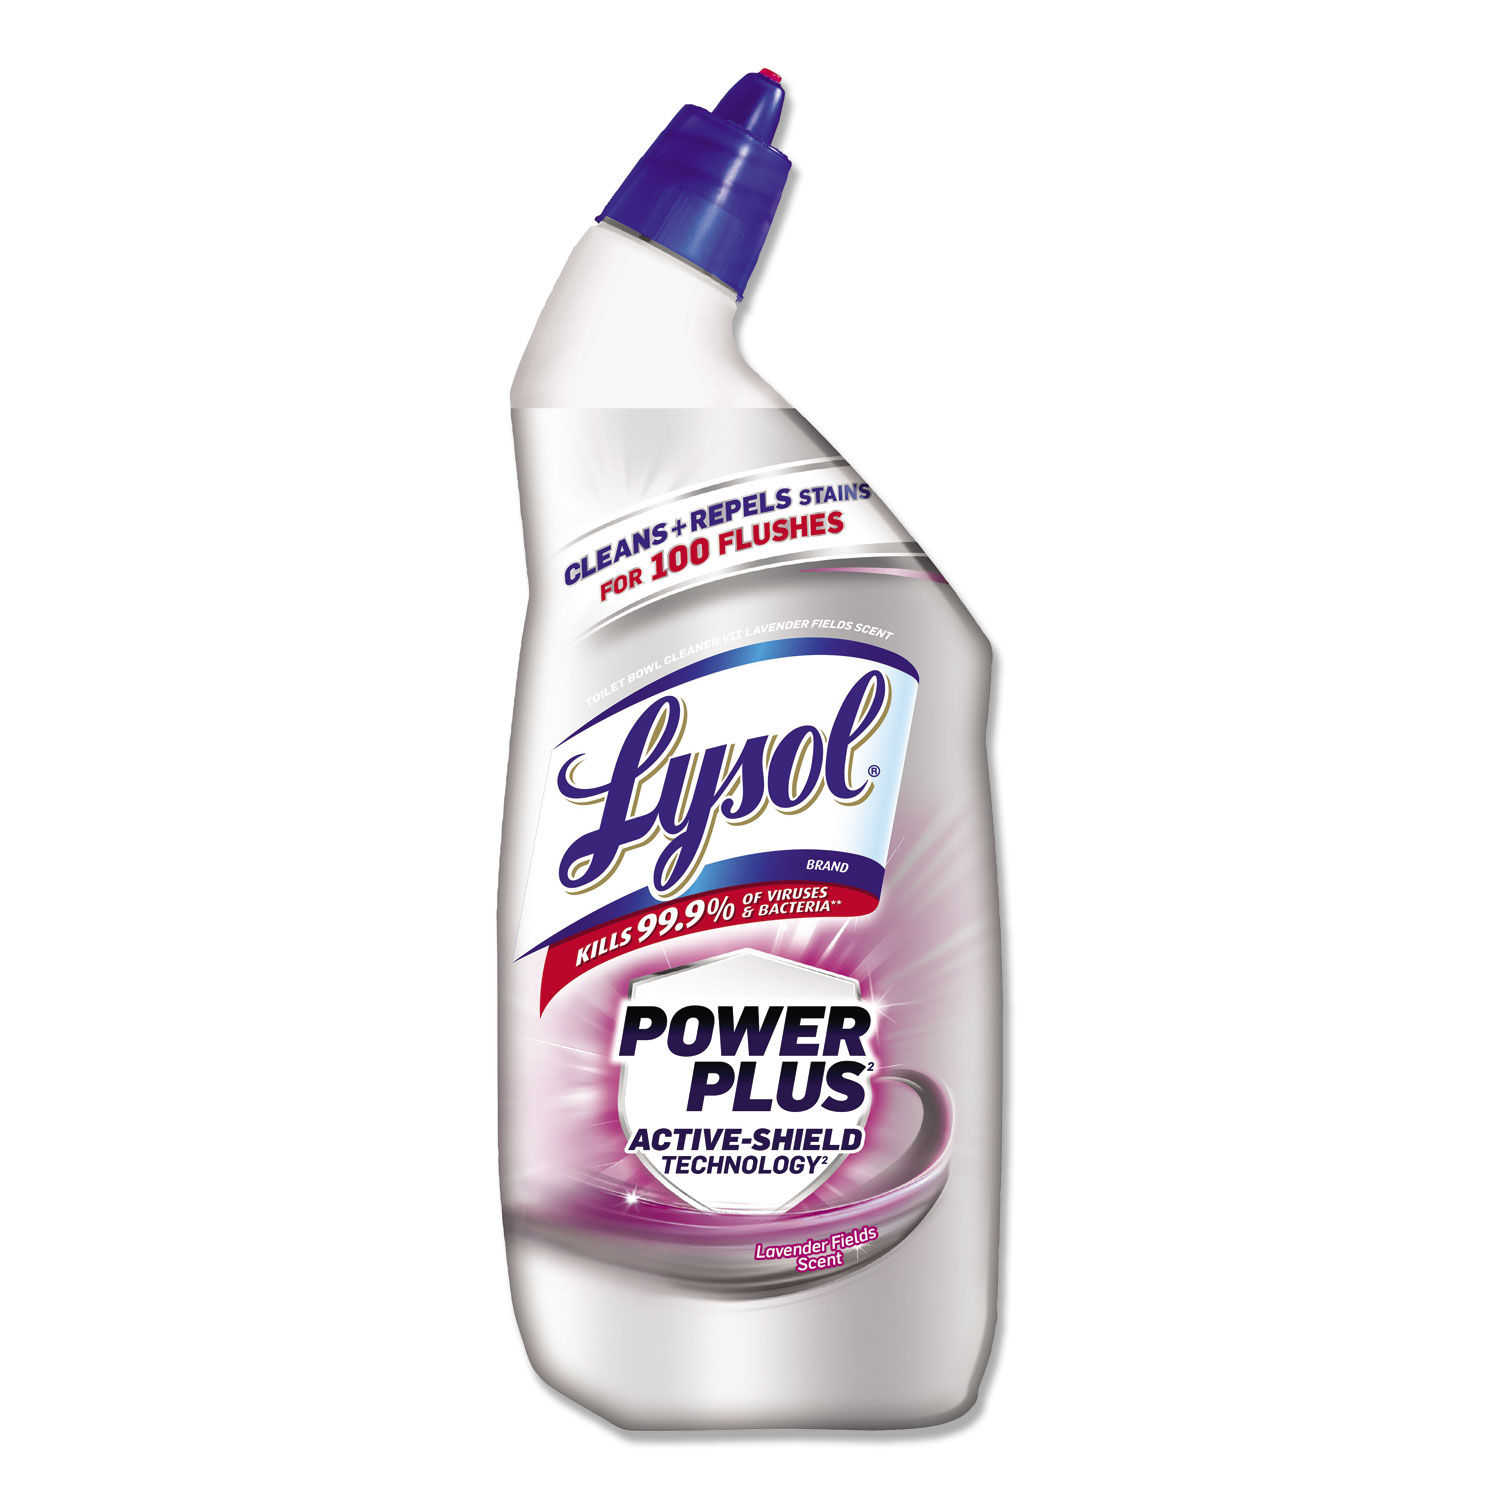 Lysol® Power Toilet Bowl Cleaner